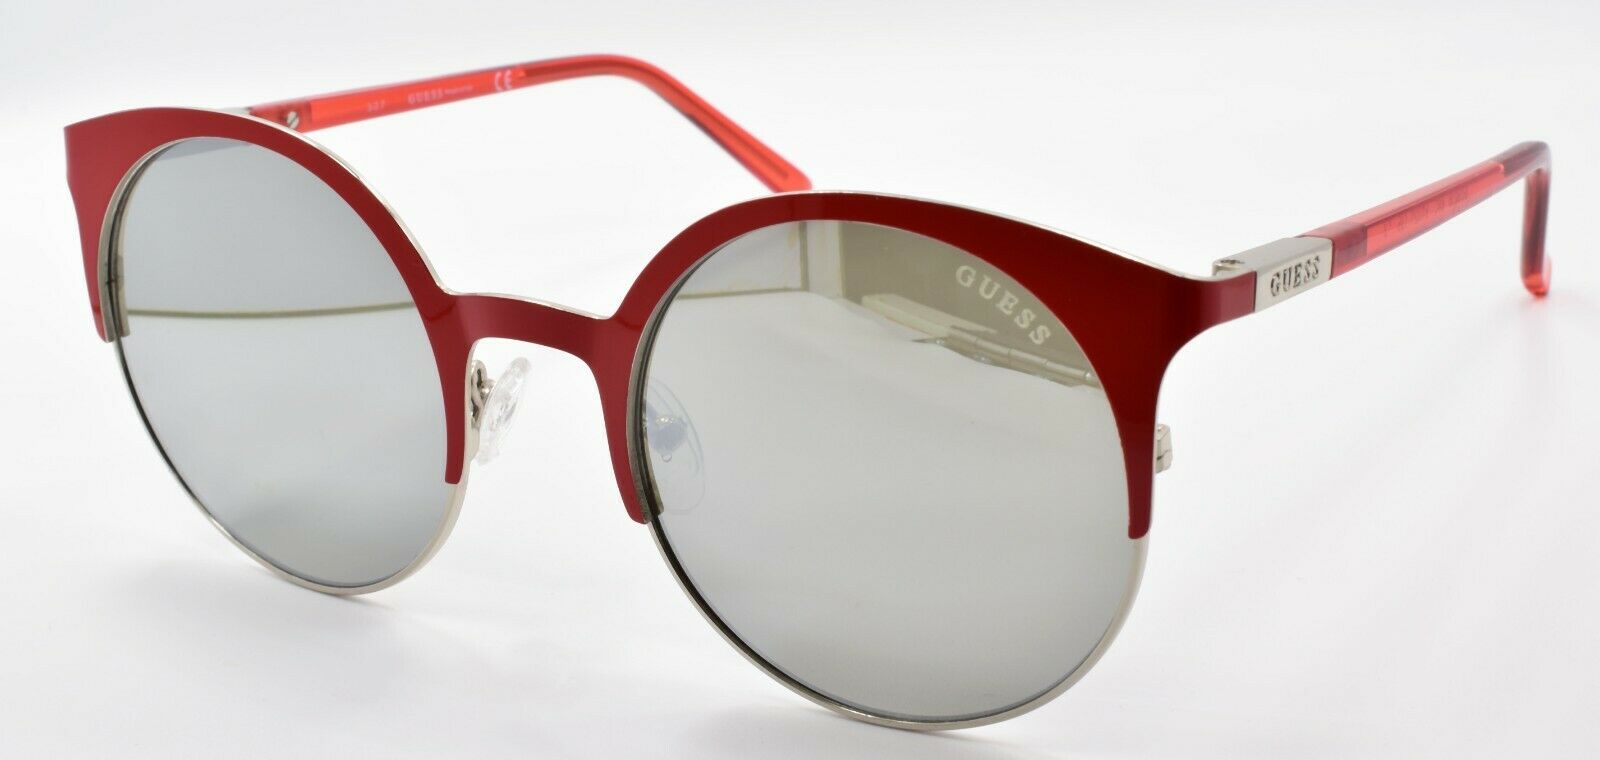 1-GUESS GU3036 68C Women's Sunglasses Round 51-21-135 Red / Silver Mirrored-664689952526-IKSpecs